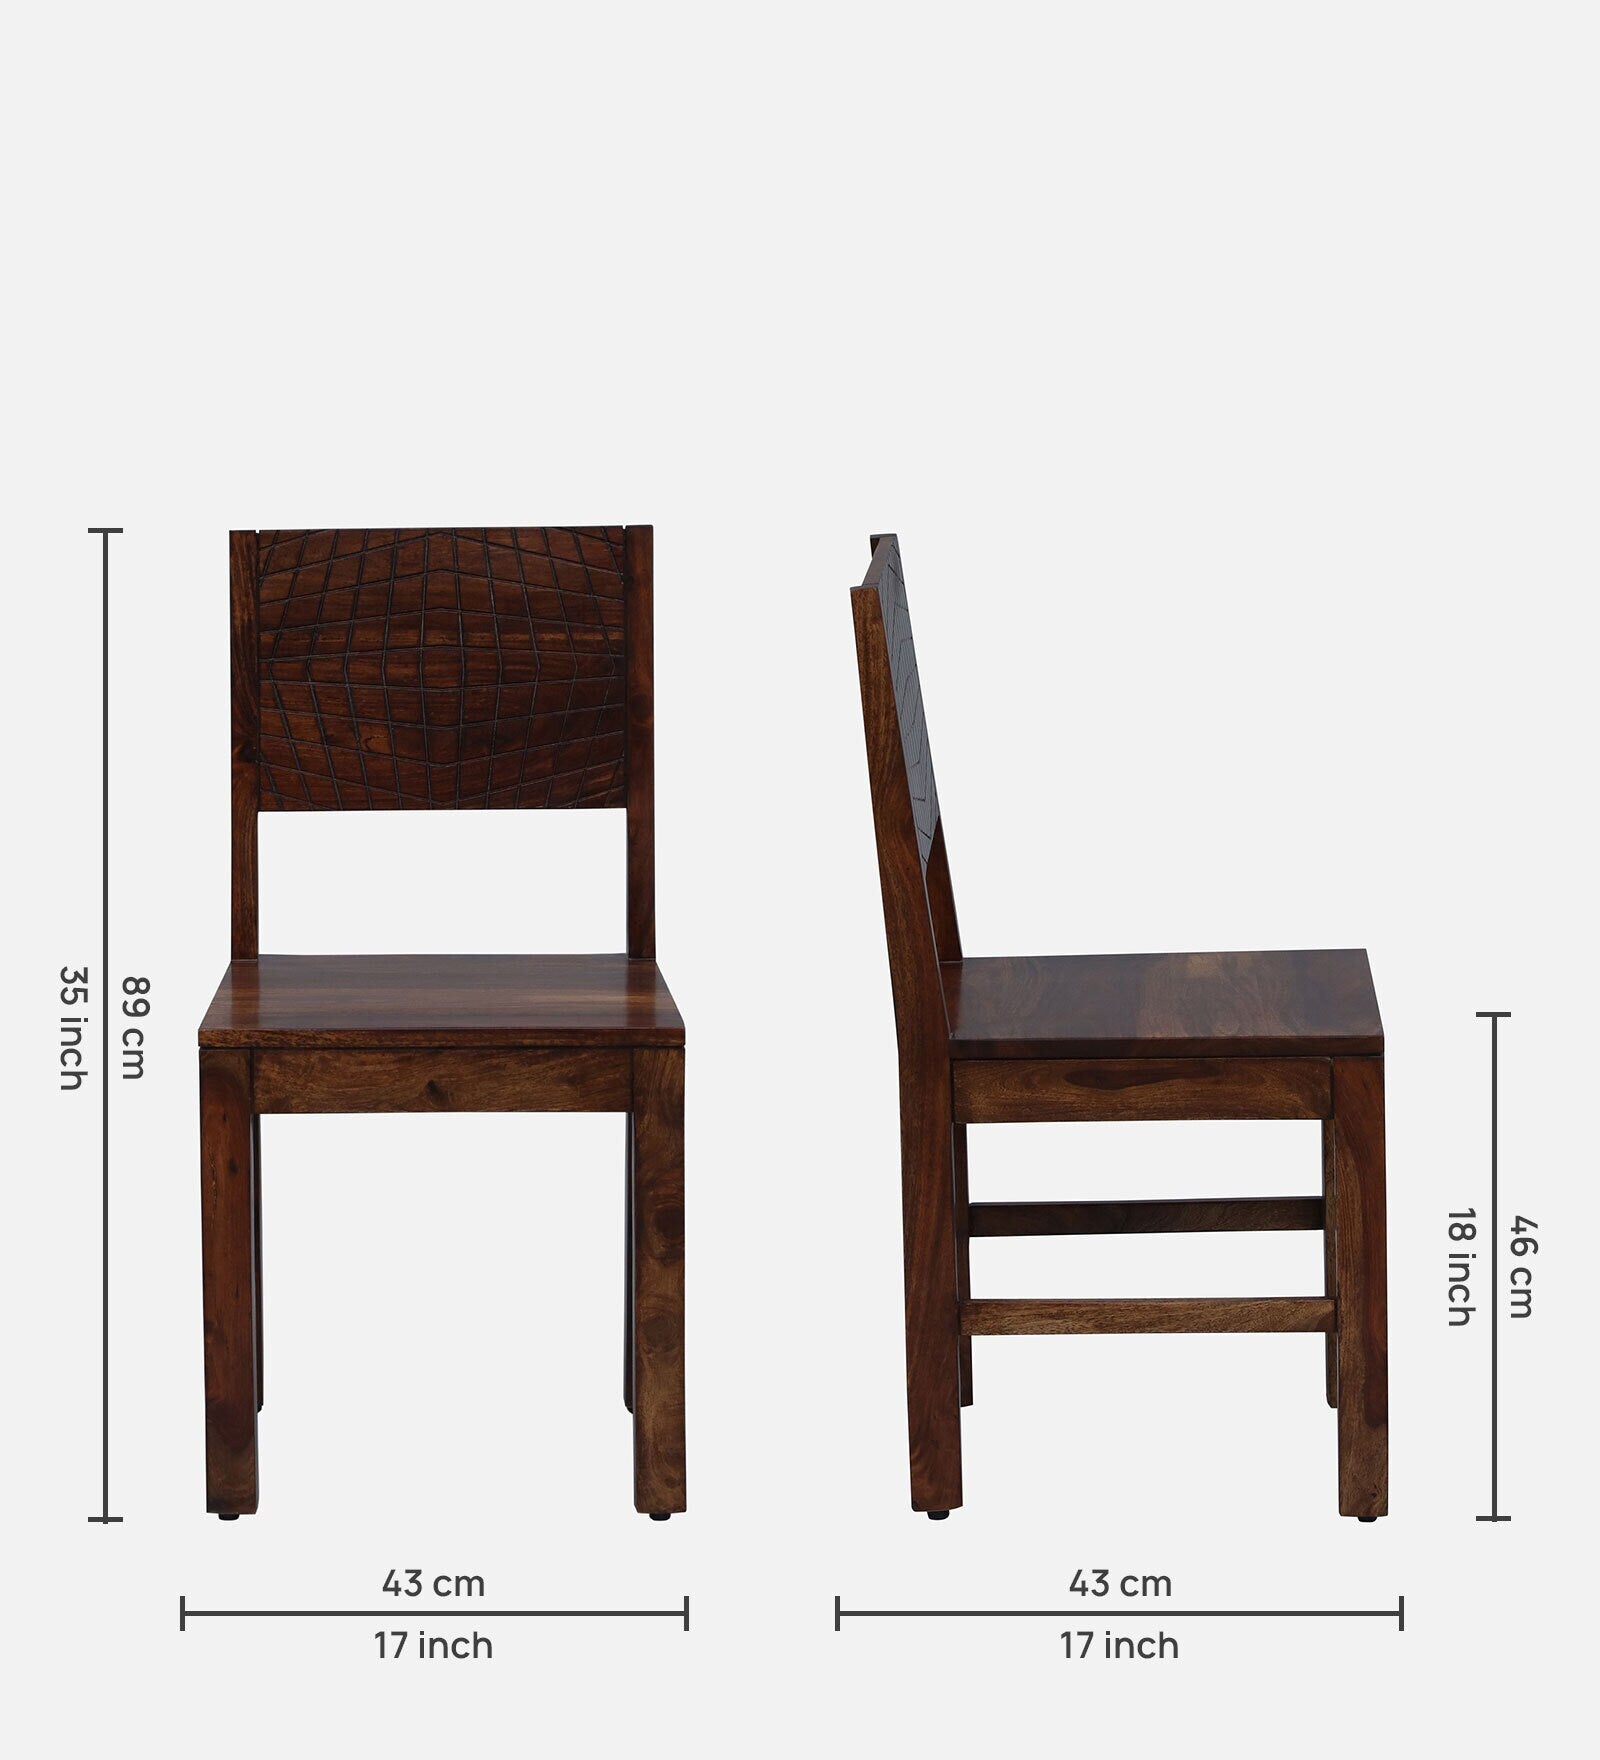 Harmonia Solid Wood Dining Chair (Set of 2) In Provincial Teak Finish By Rajwada - Rajwada Furnish